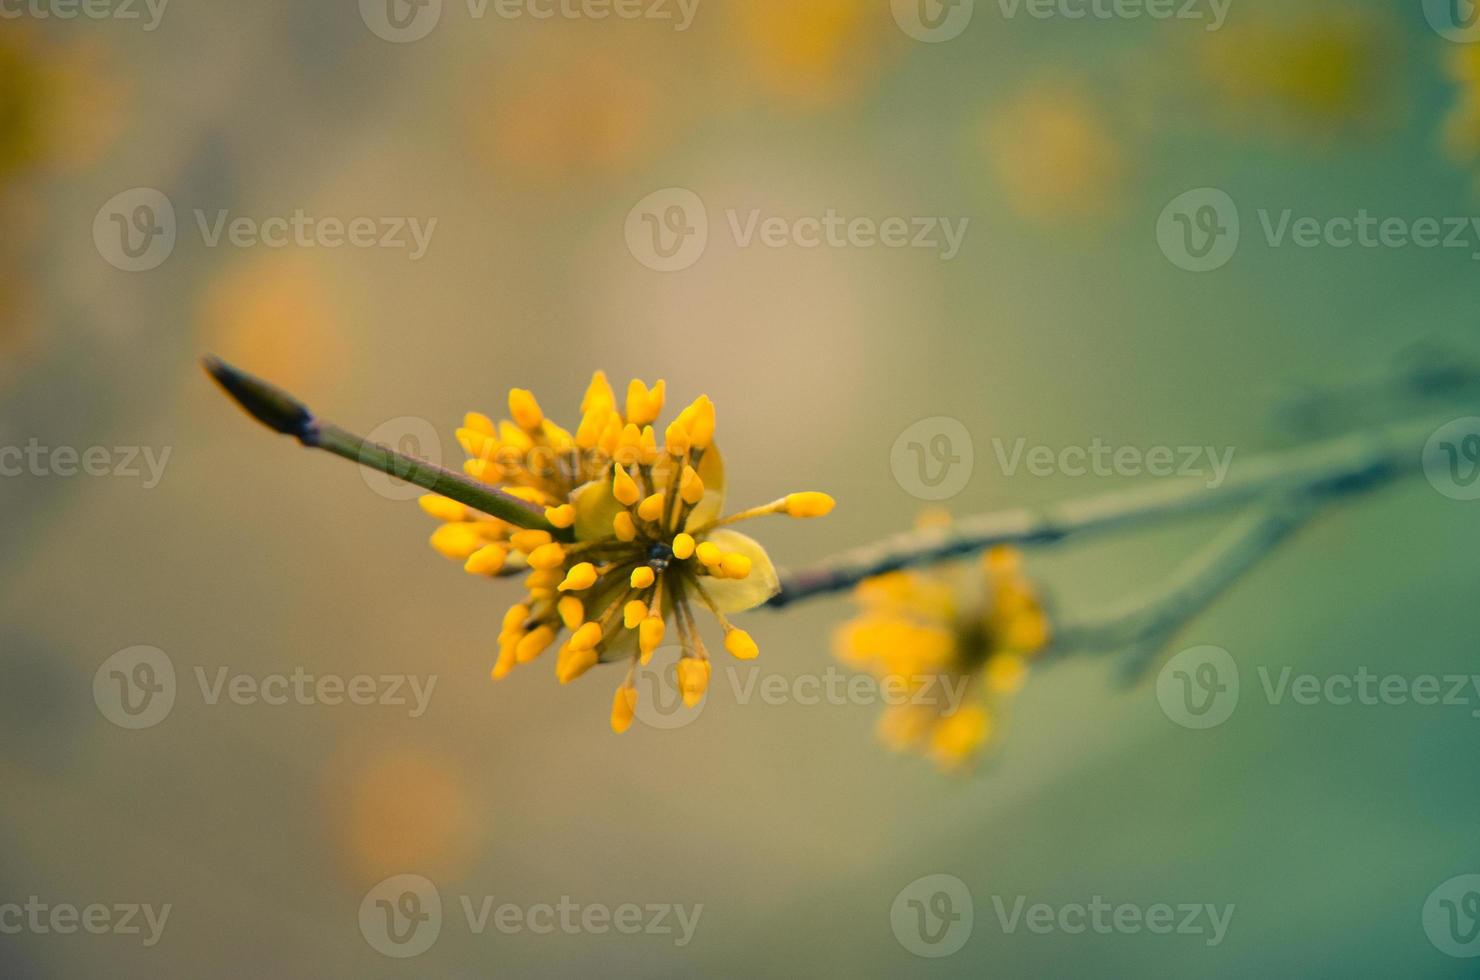 European Cornel tree bossom flowering photo